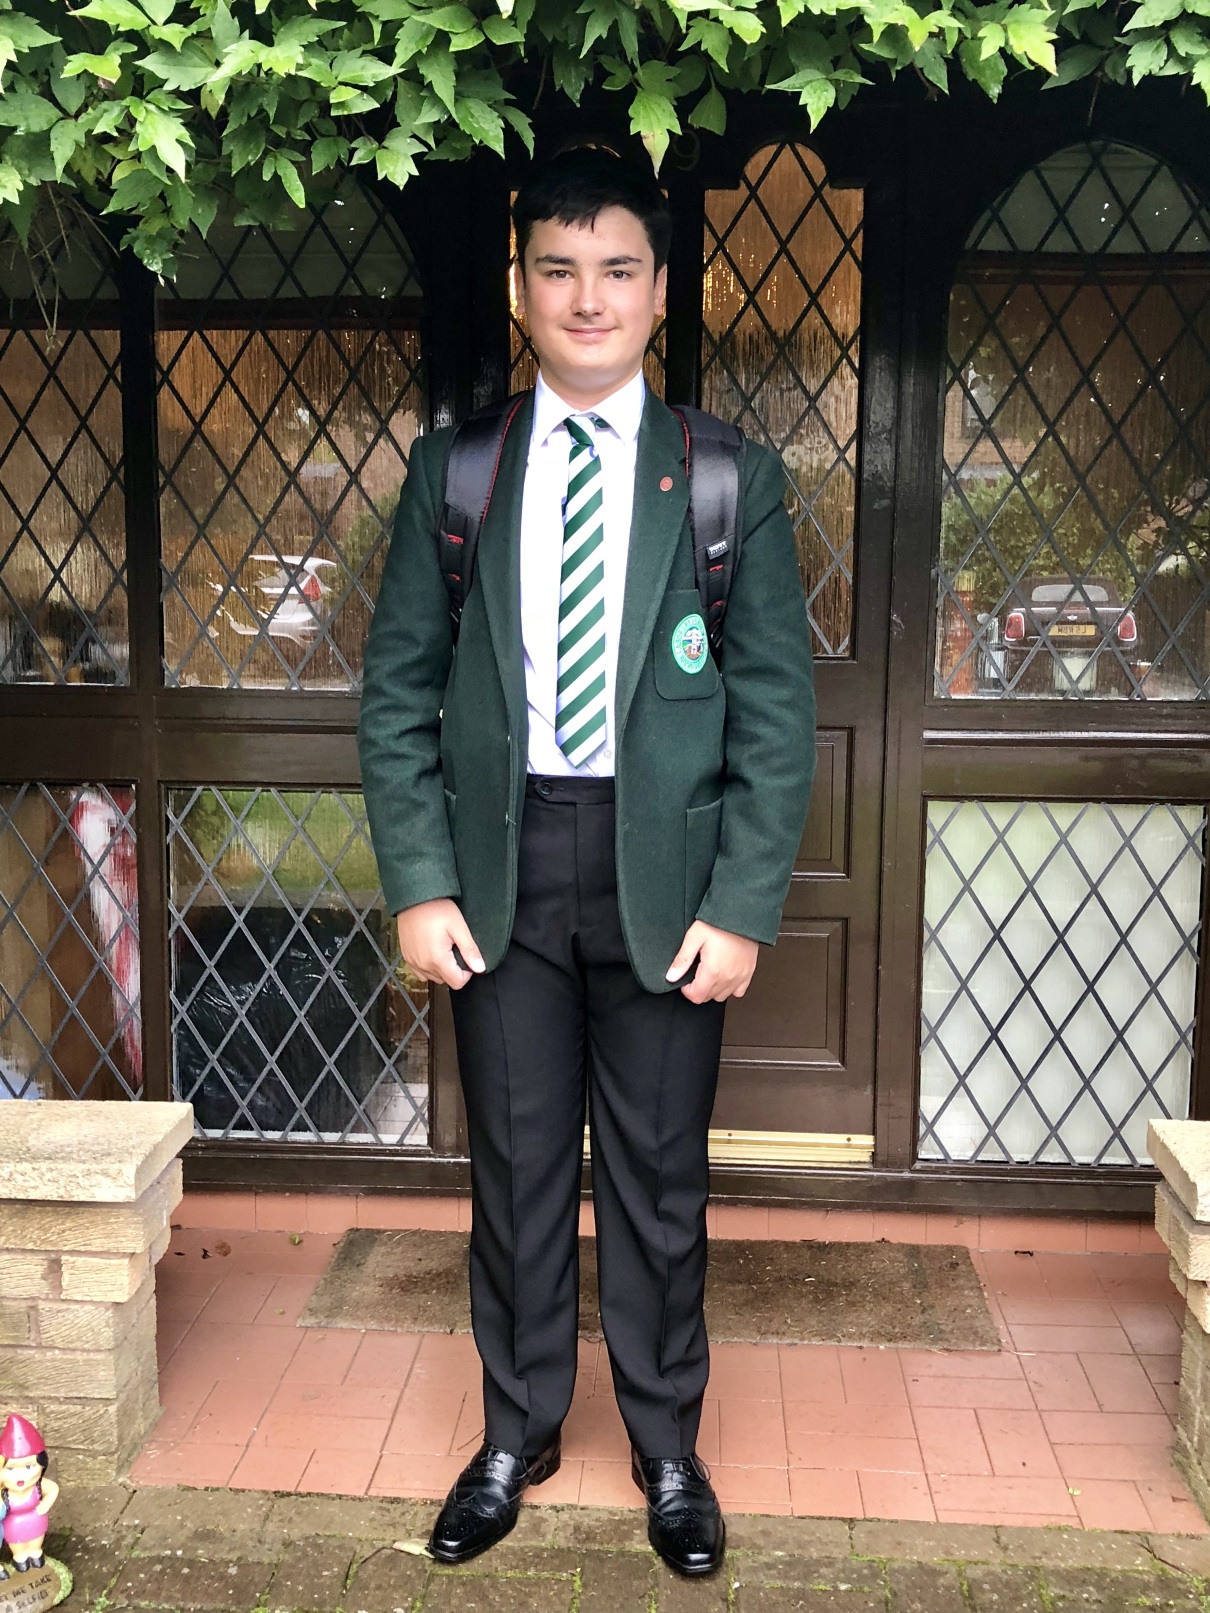 St Columba's Back to School Aug 2018